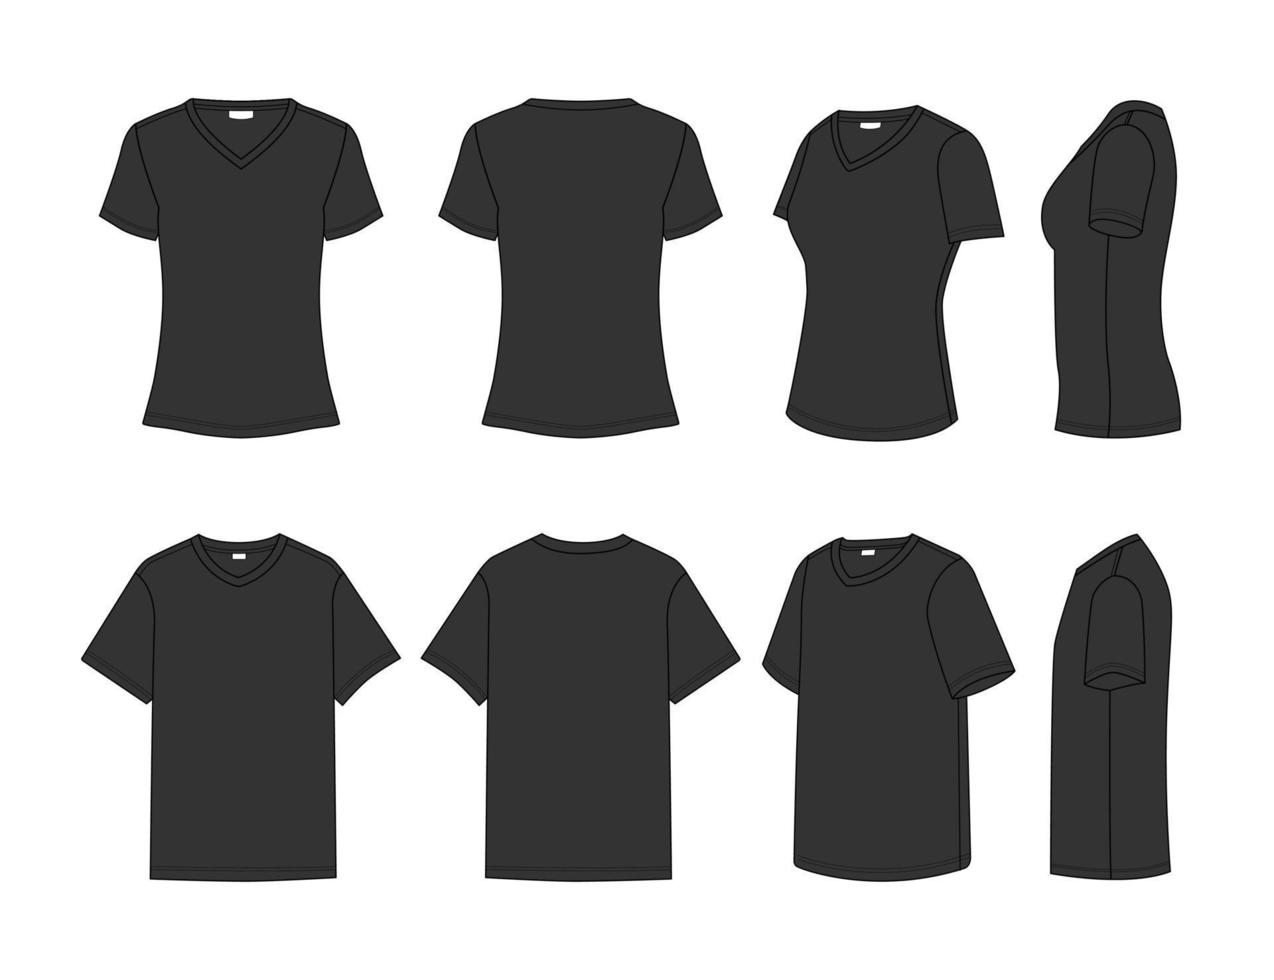 zwart schets vrouw en mannetje v-hals t-shirt mockup vector